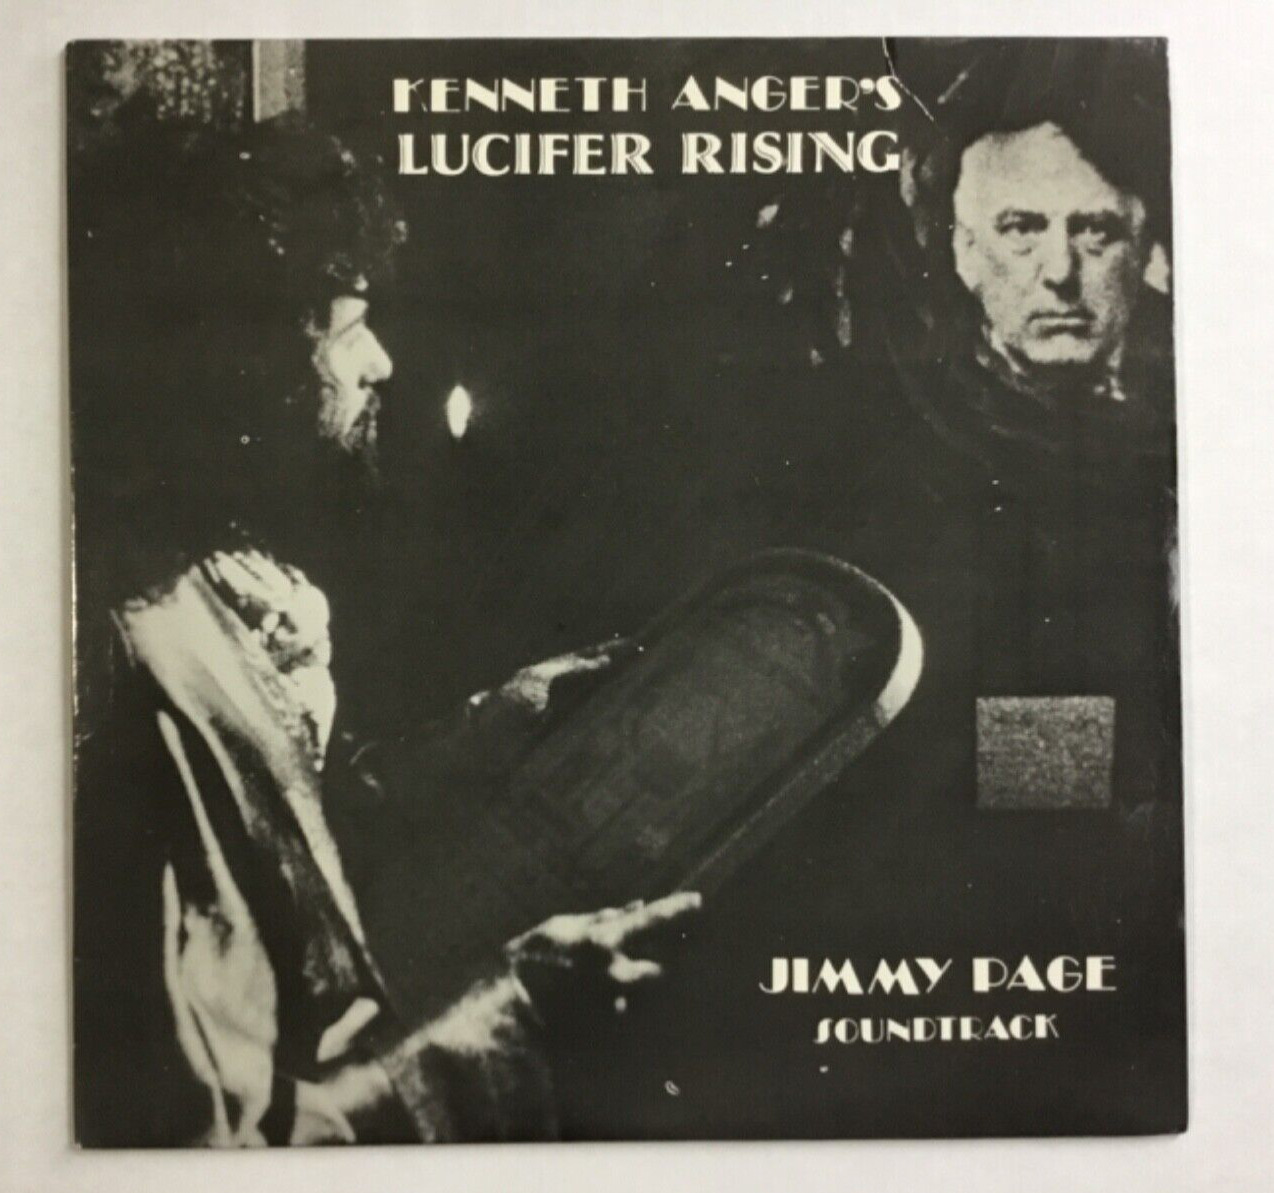 Rare Jimmy Page of Led Zeppelin Lucifer Rising soundtrack on blue vinyl